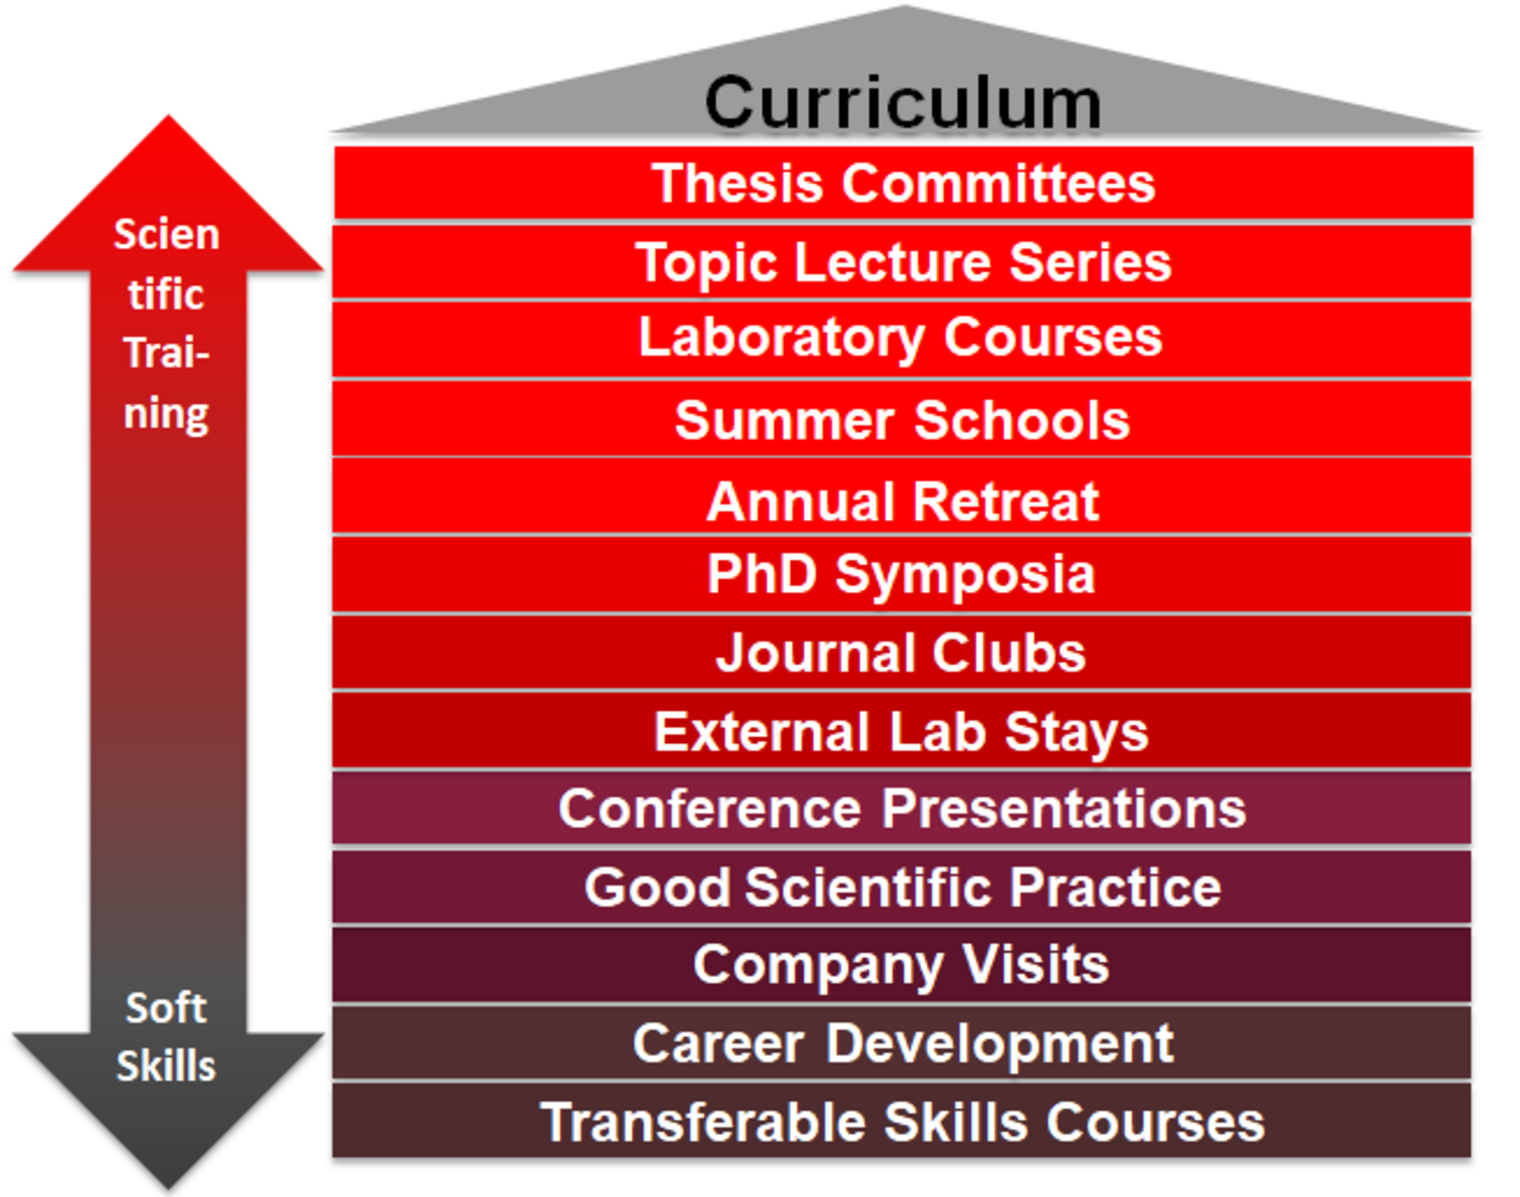 Curriculum of the HZI Gradschool